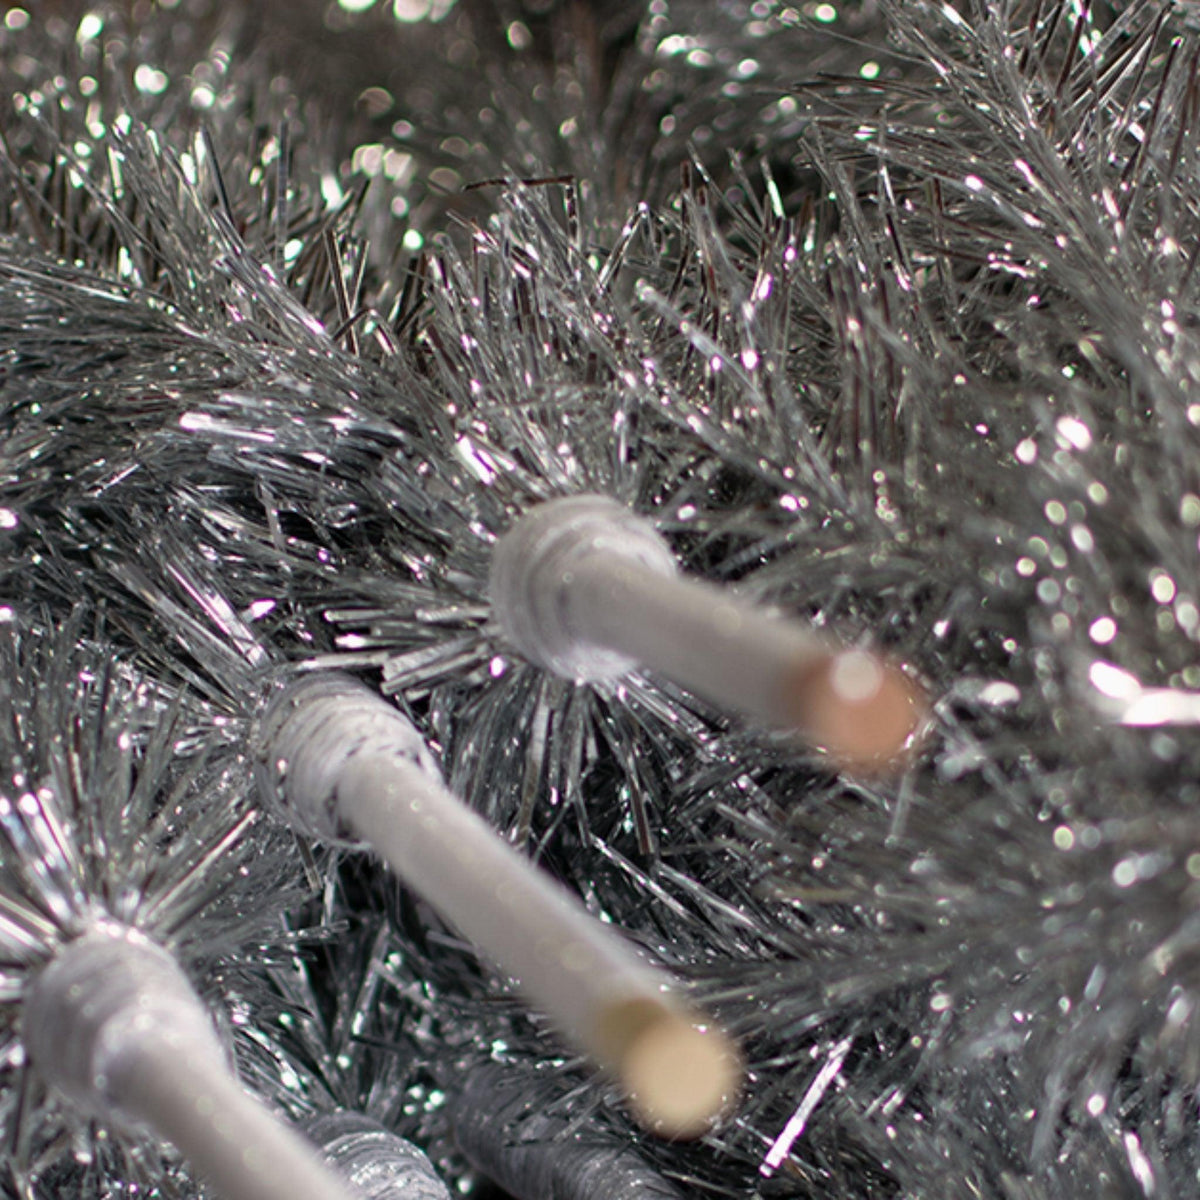 Silver Tinsel Christmas Tree - Lee Display